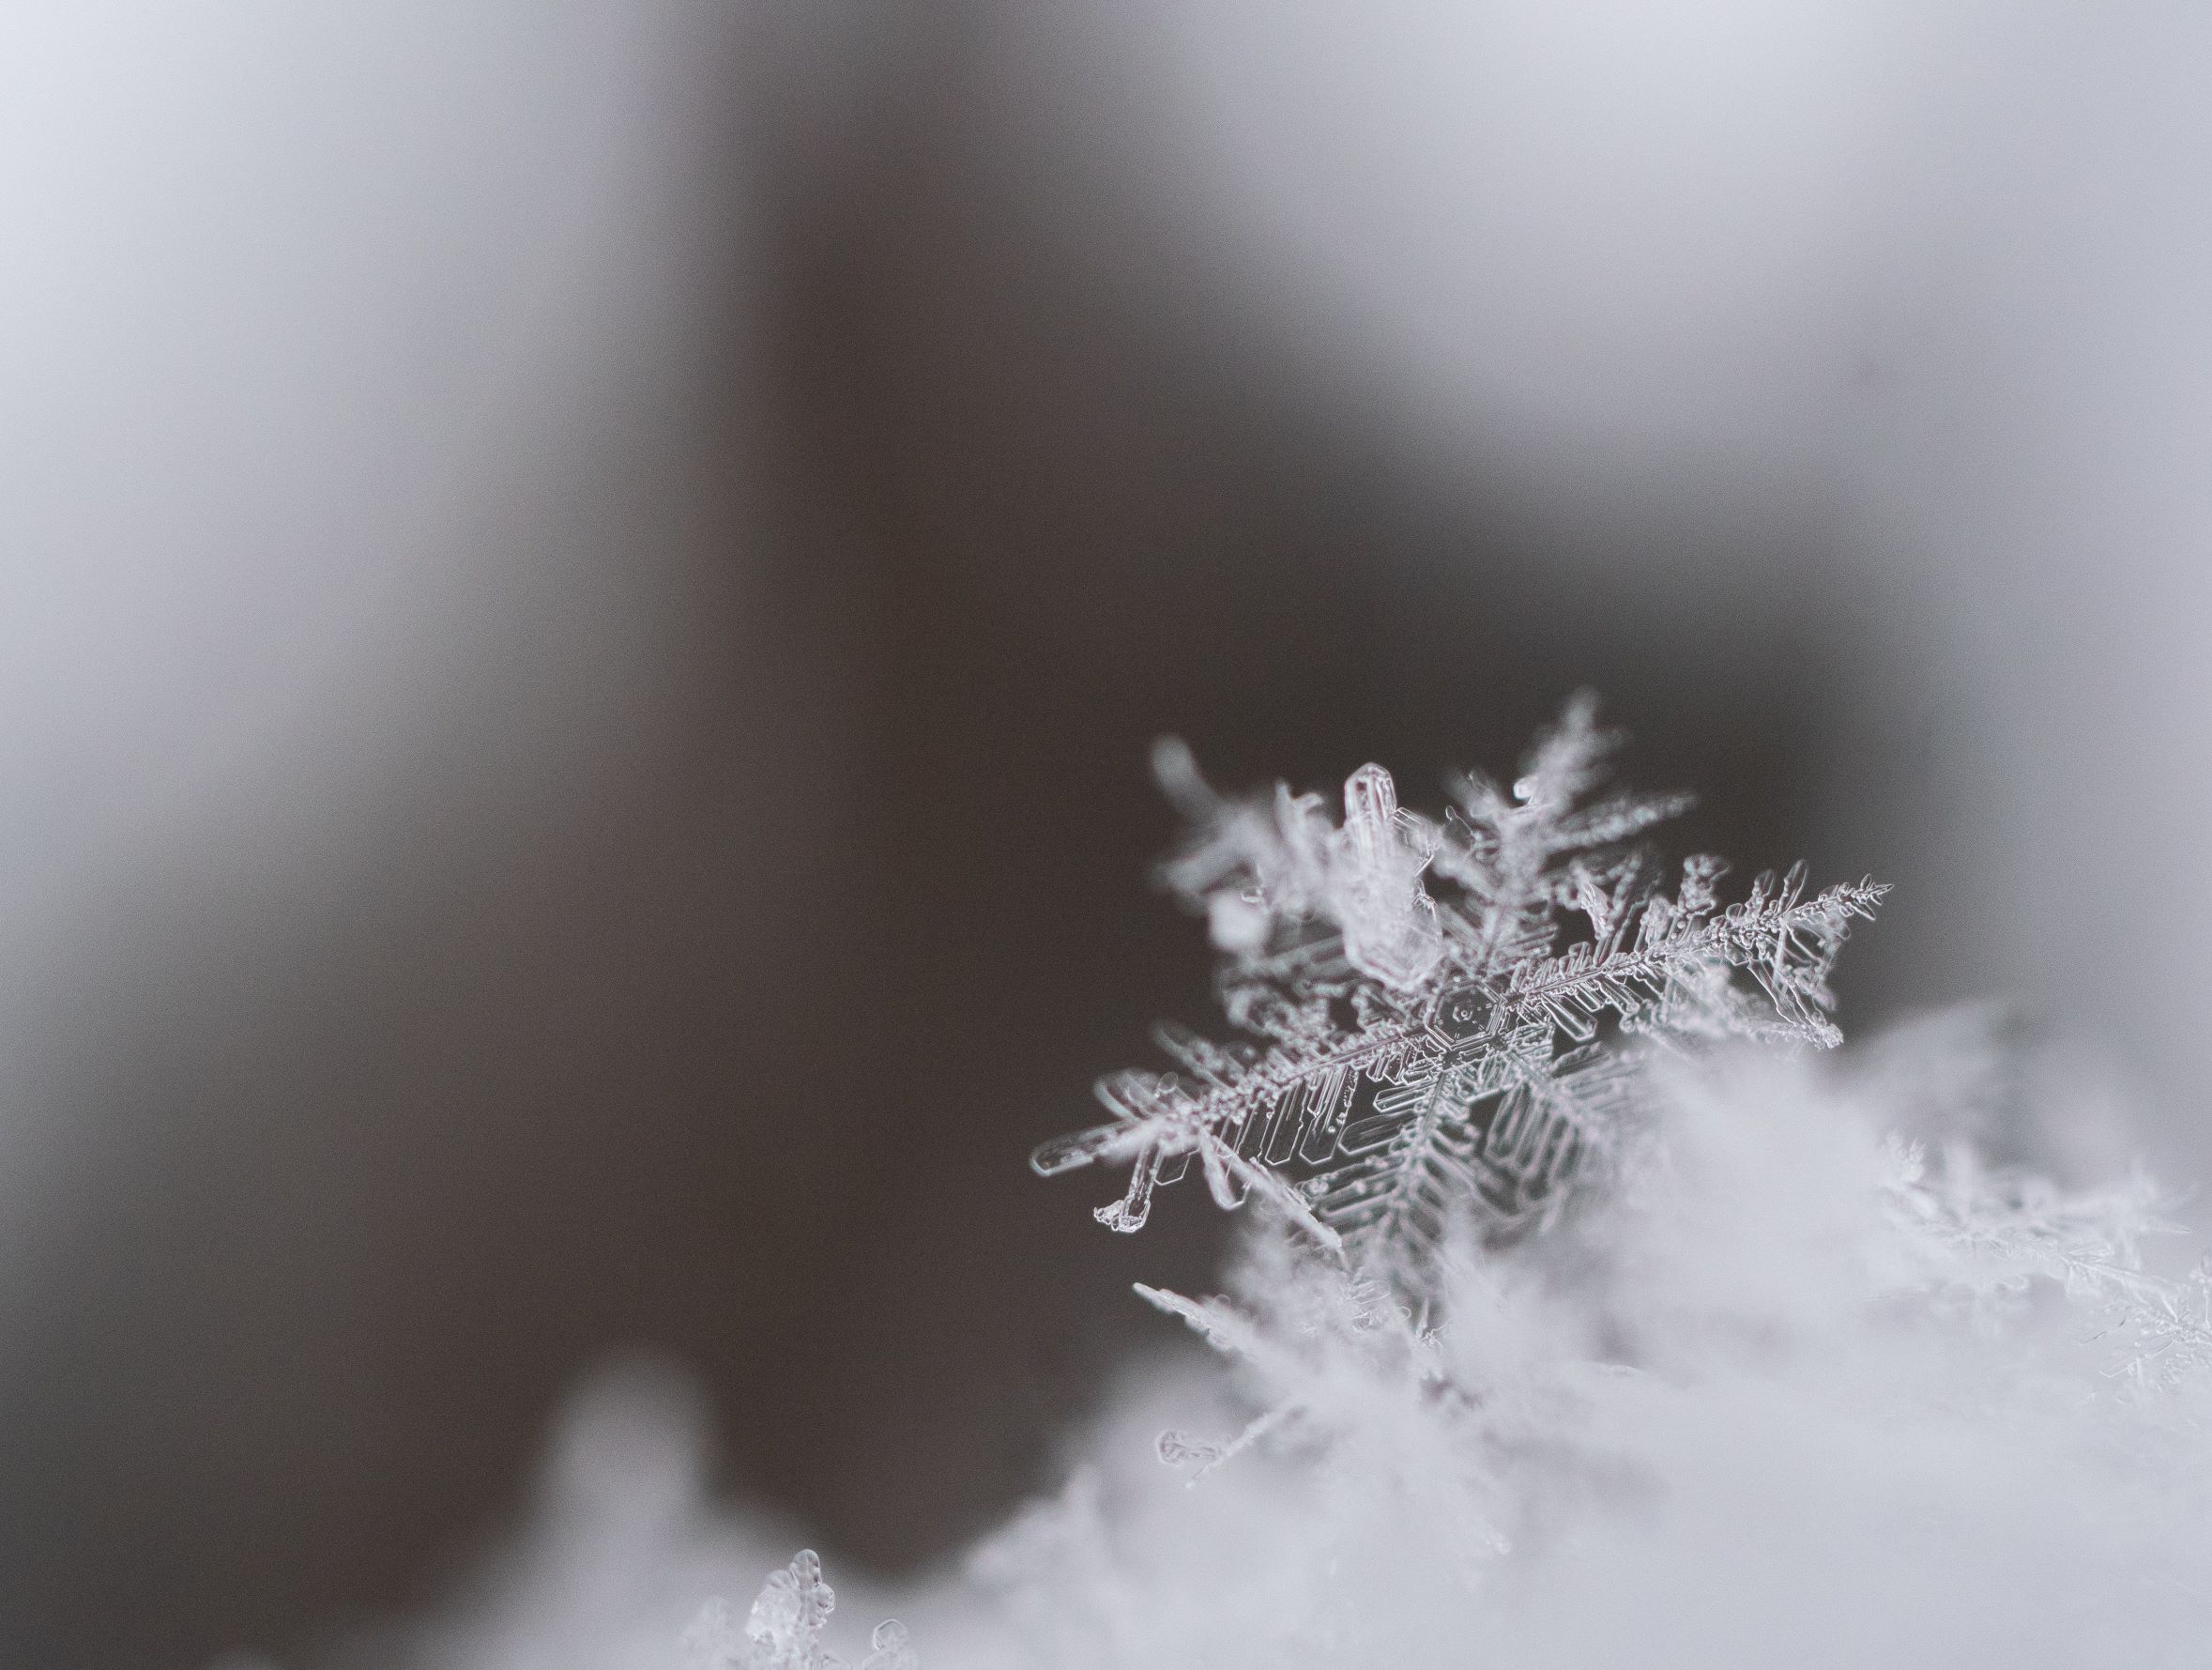 close-up snowflake photo to represent seasonal depression